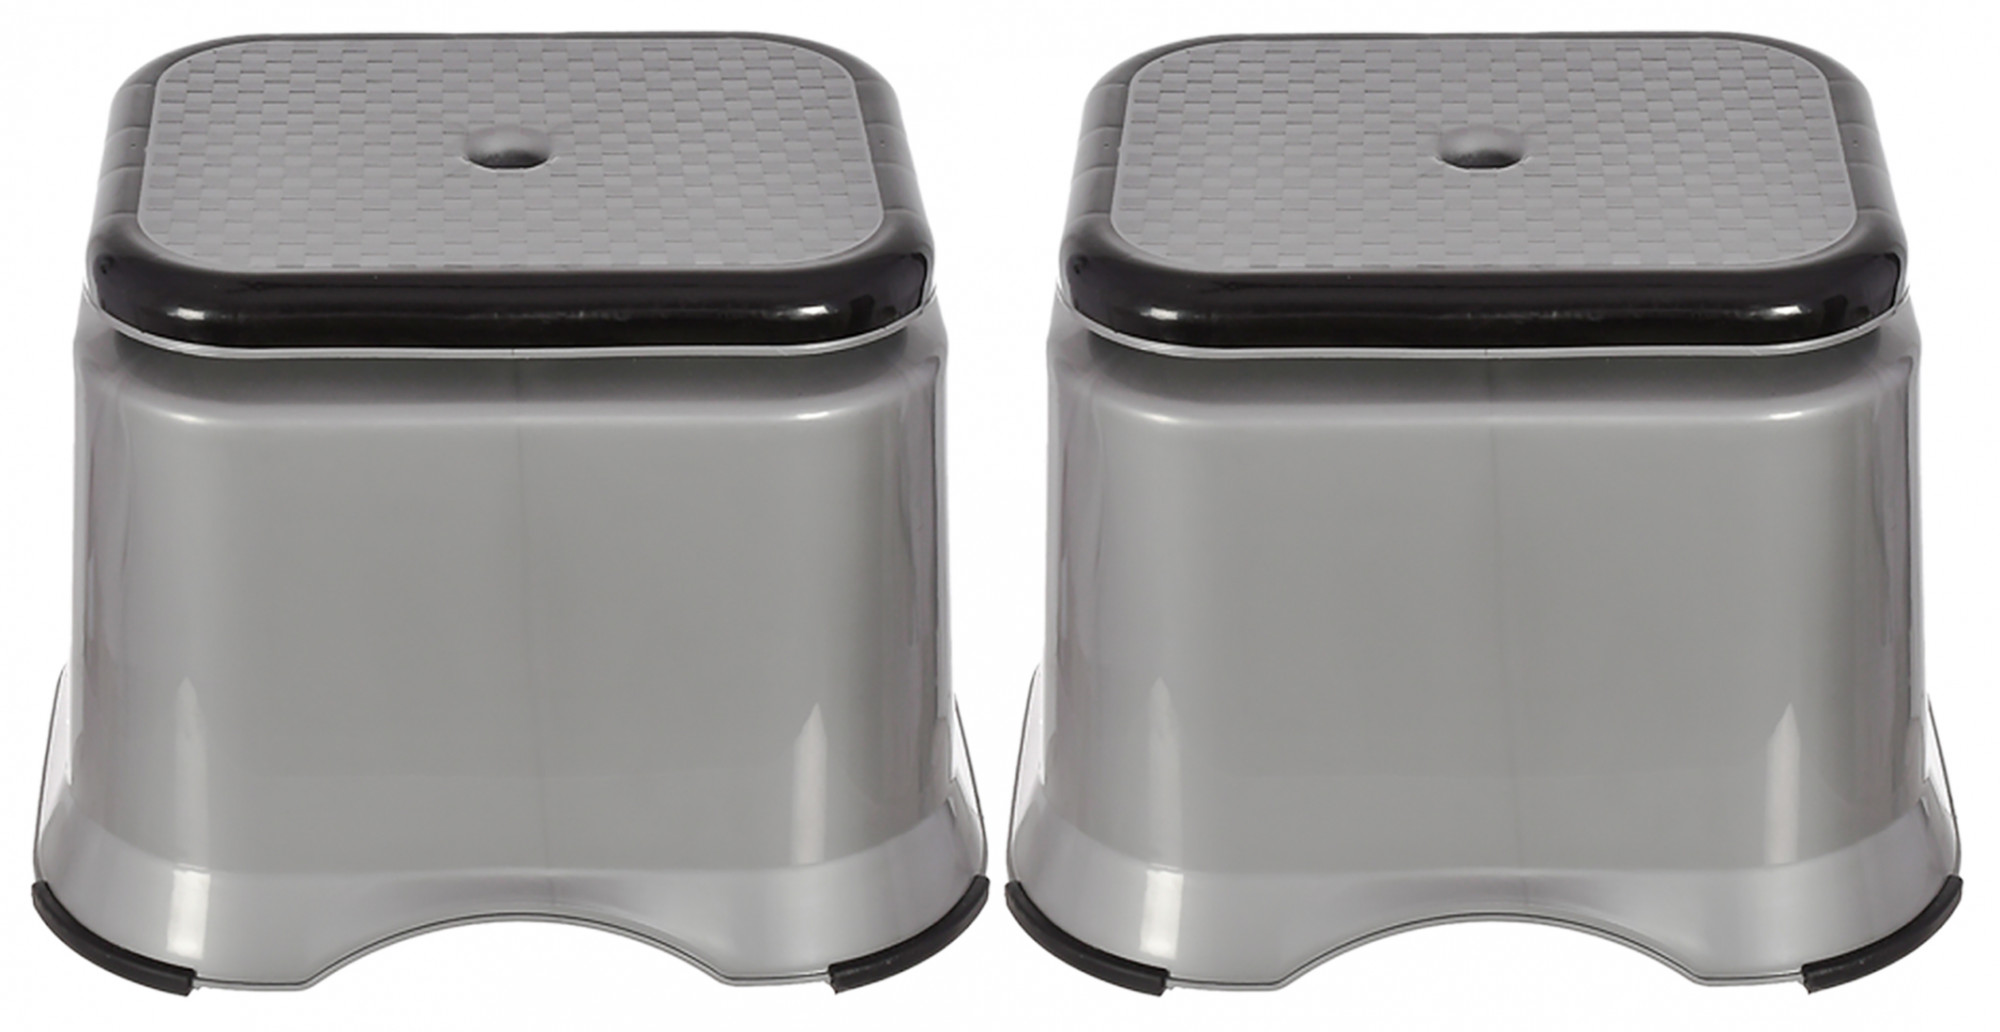 Kuber Industries Ultra 10 Multiuses Portable, Lightweight, Strong, Durable Plastic Bathroom/Step/Sitting Stool, Patla (Grey)-46KM0145